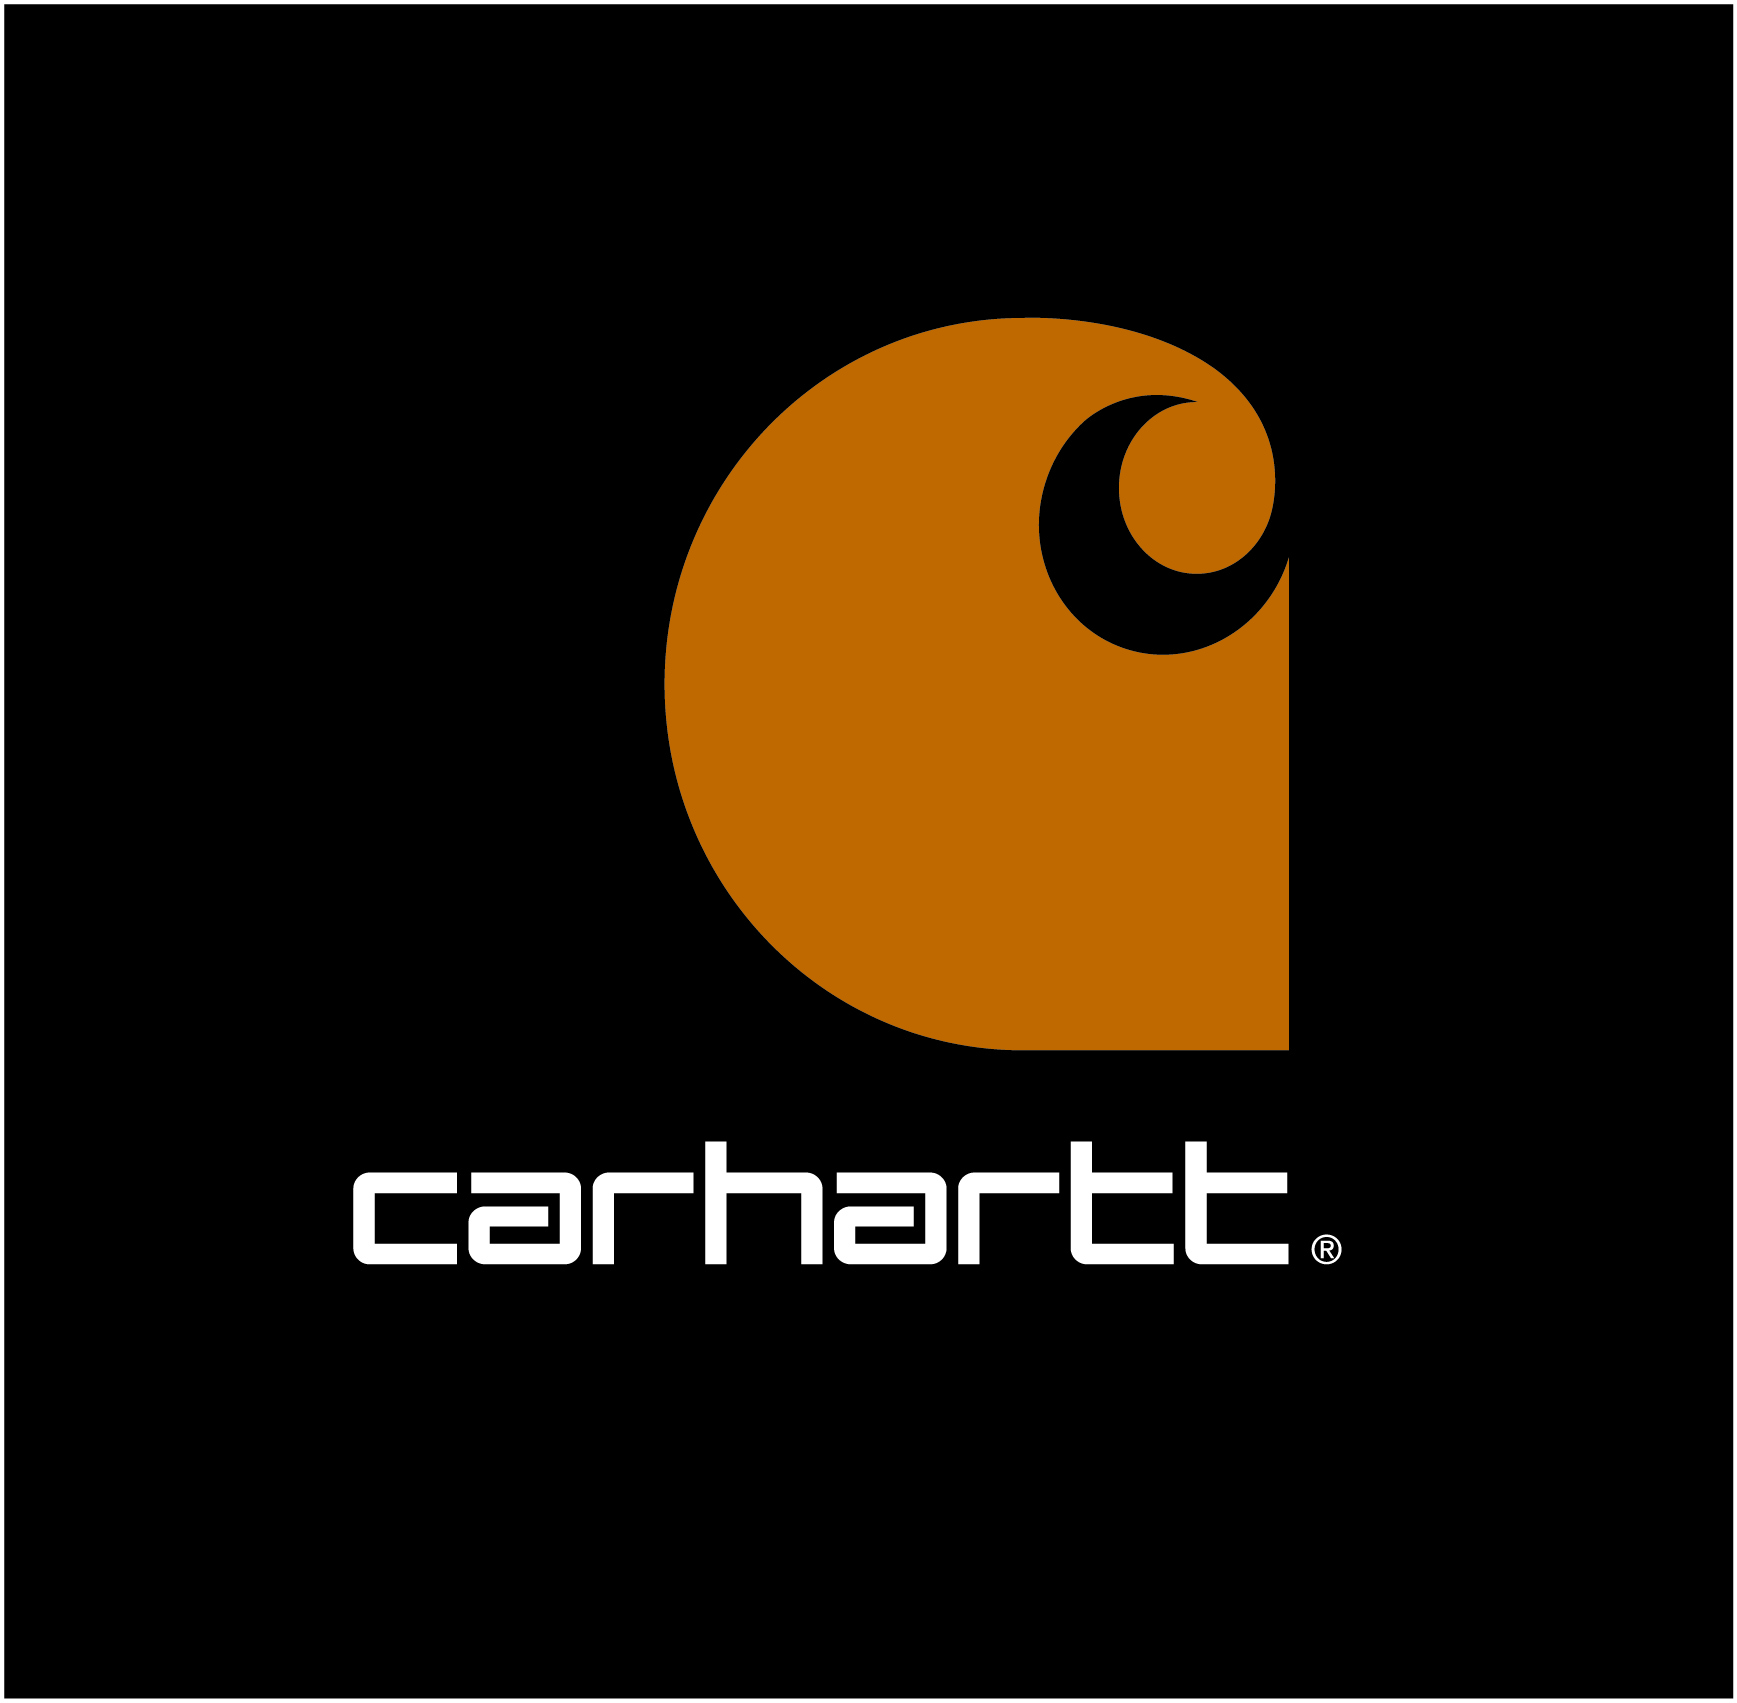 Carhartt_Logo-brwn with blk square backdrop.jpg